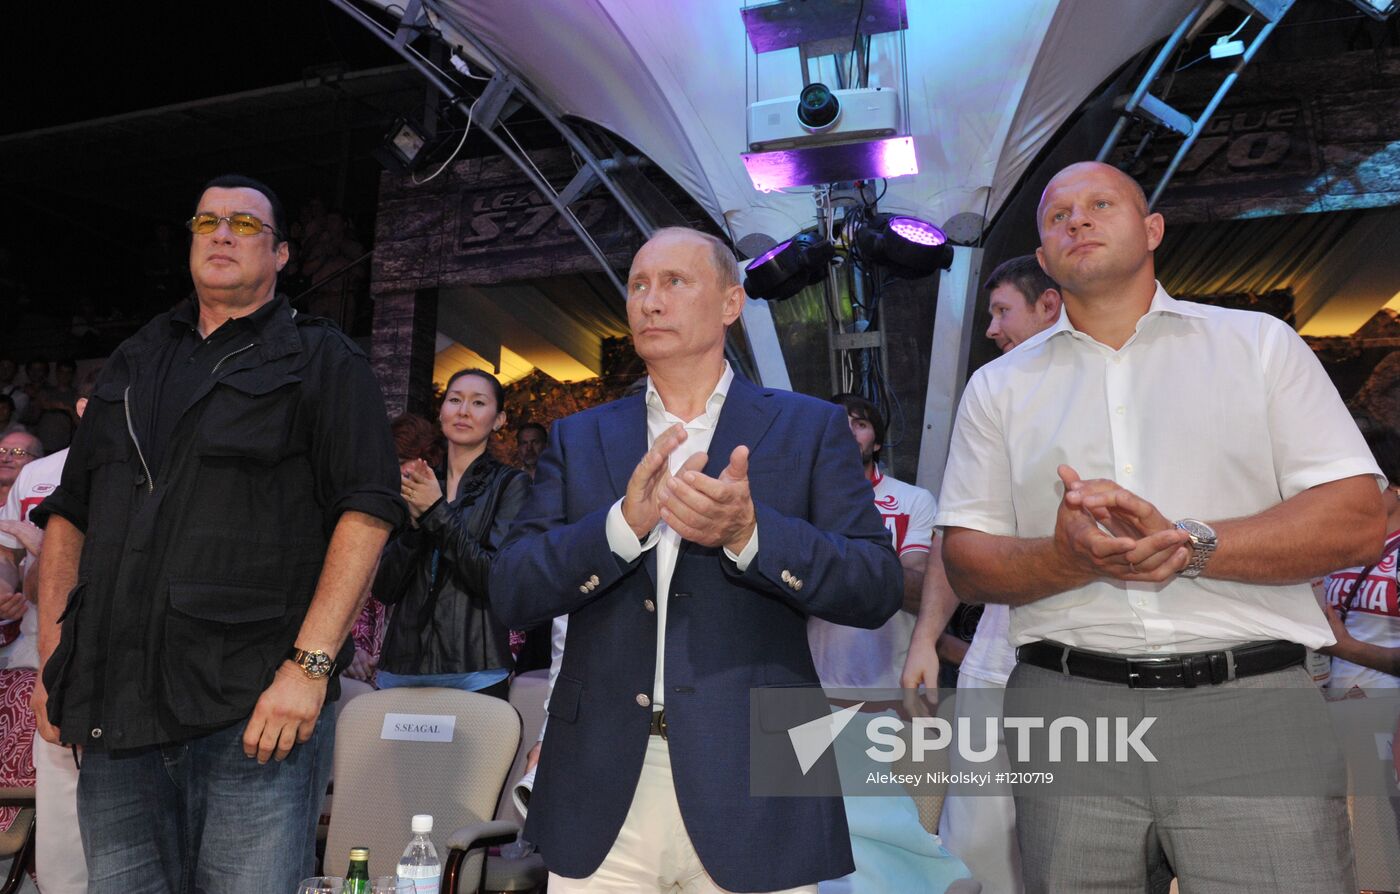 V. Putin attends first Russian mixed martial arts championship